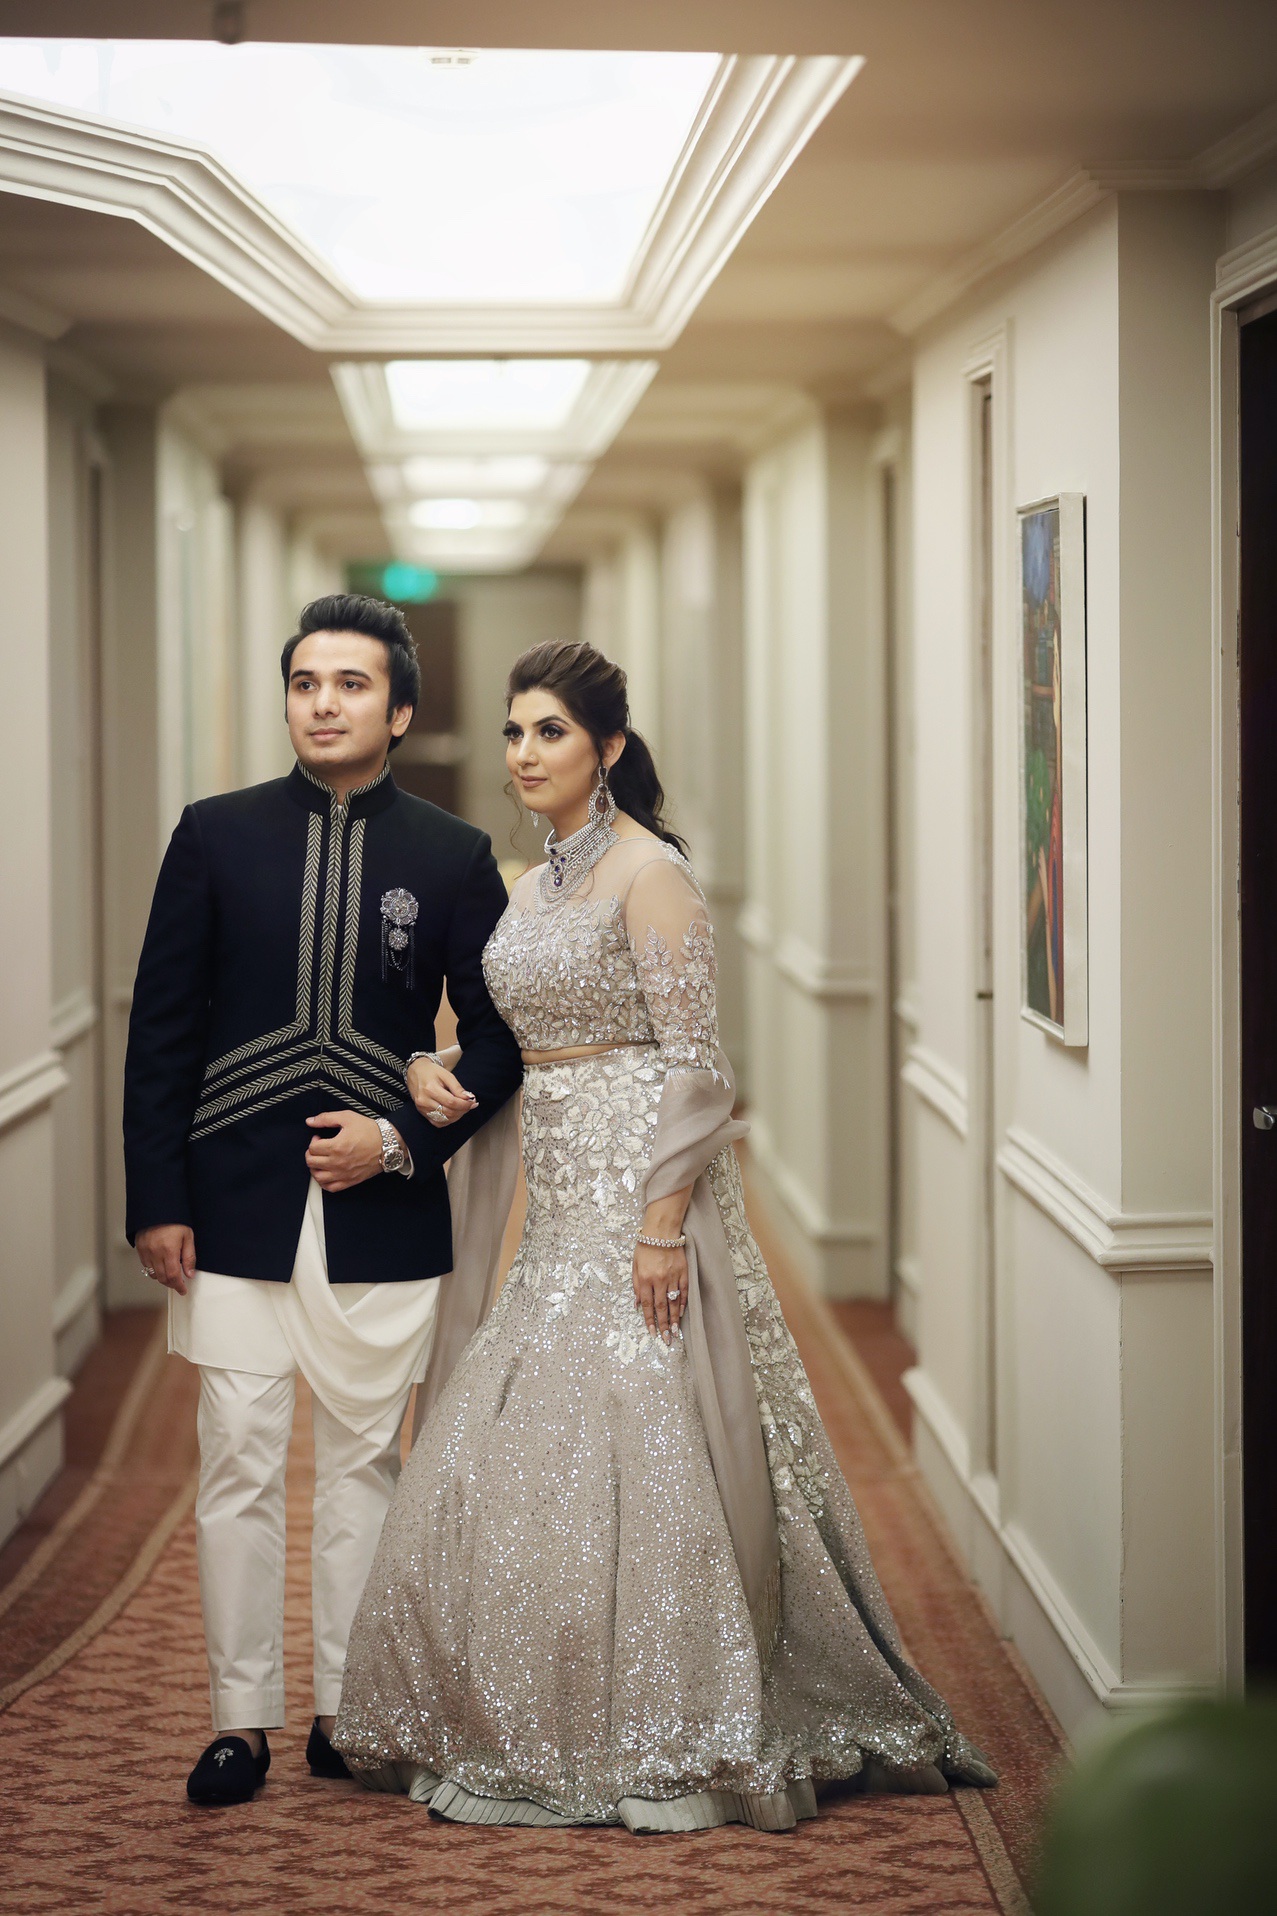 Aman & Rohini | Wedding couple poses photography, Indian wedding couple  photography, Indian wedding photography poses